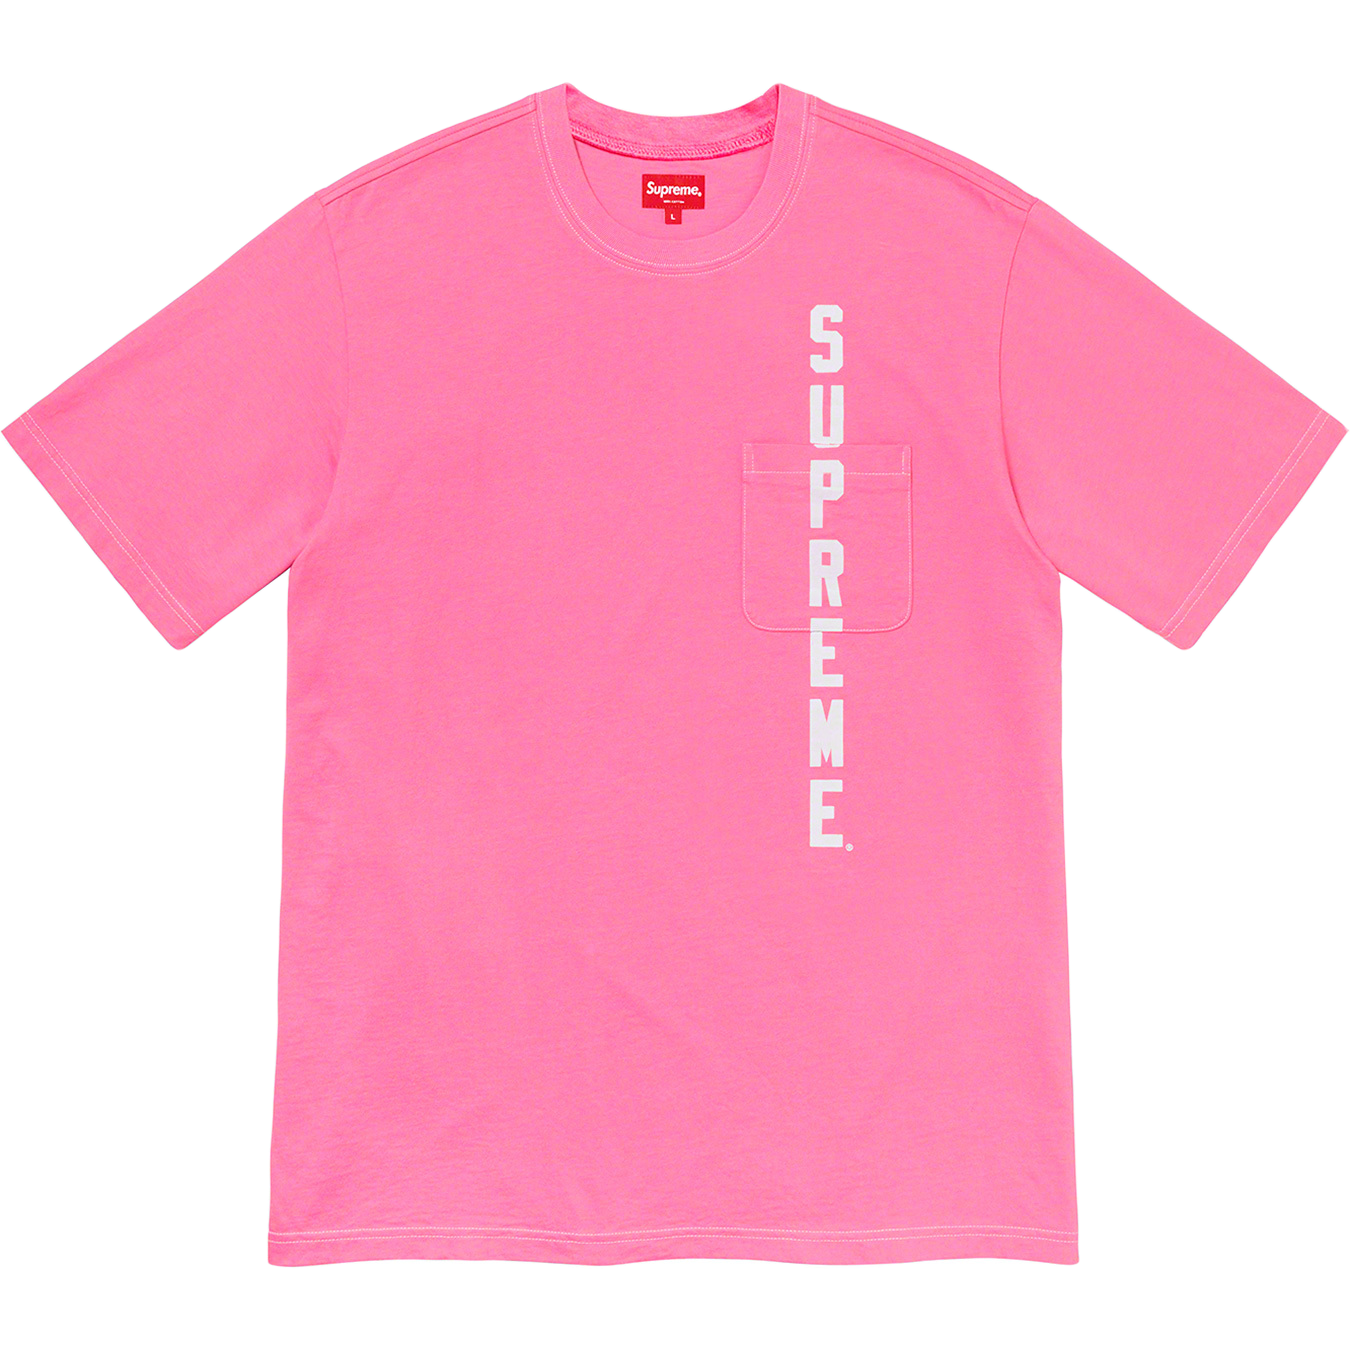 Supreme Contrast Stitch Pocket Tee - Pink - Used